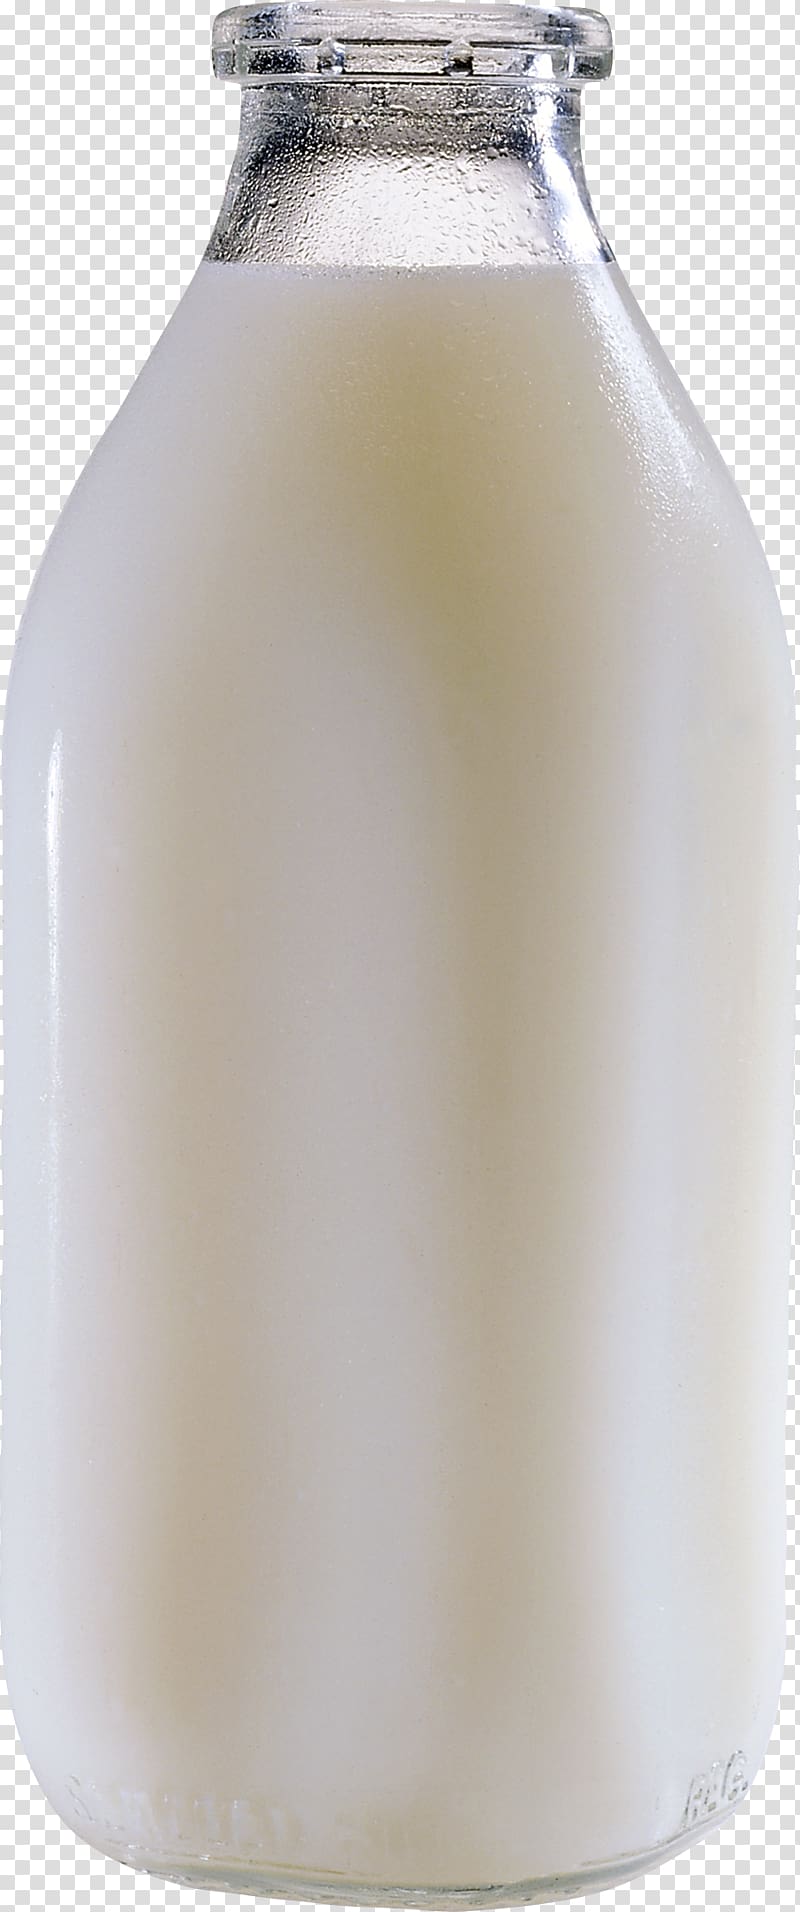 bottle of milk, Cow\'s milk Bottle Dairy product, Milk bottle transparent background PNG clipart